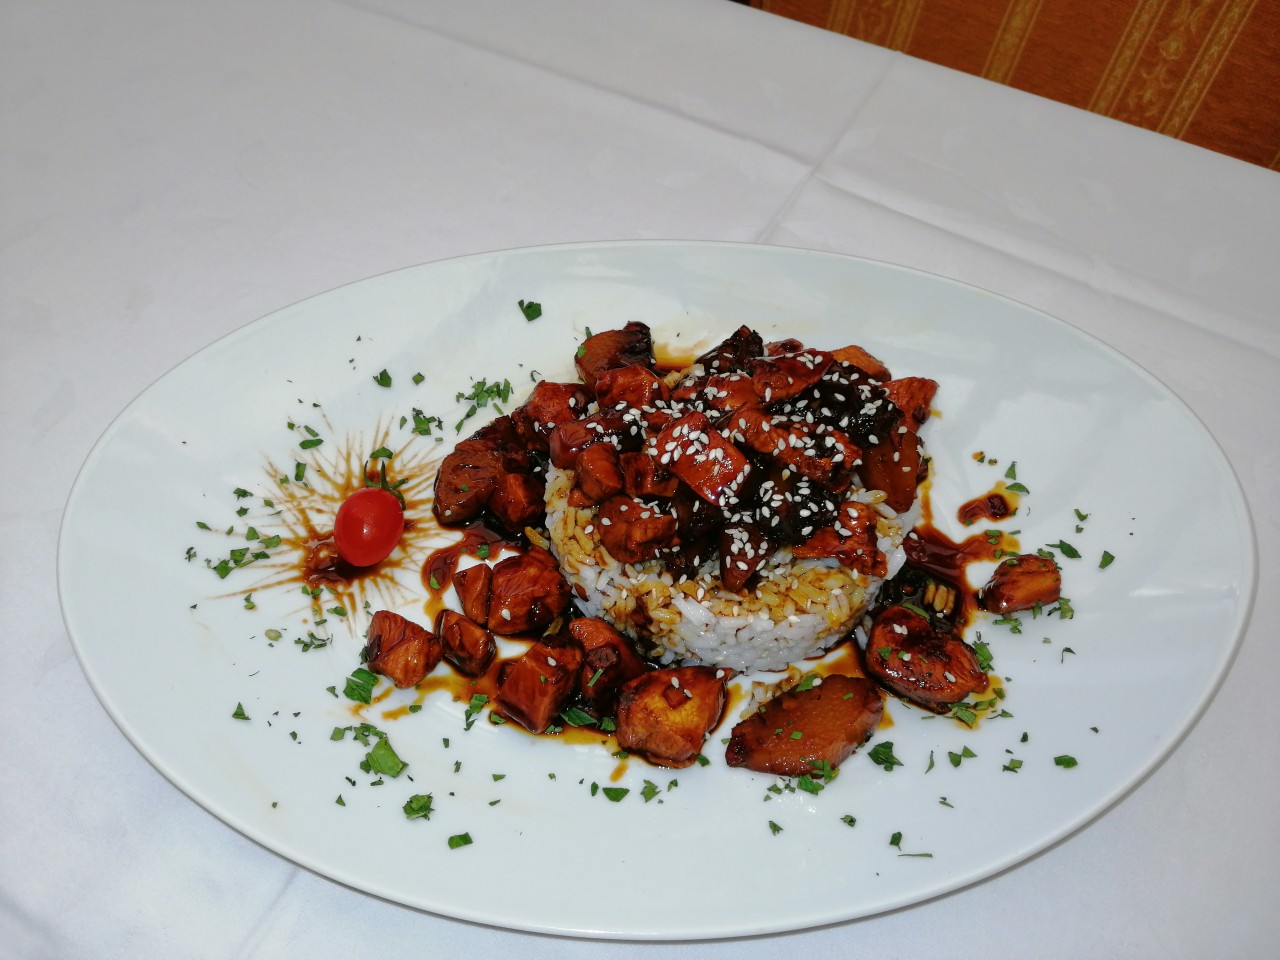 Recepti po preporuci kuhinje hotela “Stari Banat”: EGZOTIČNA PILETINA